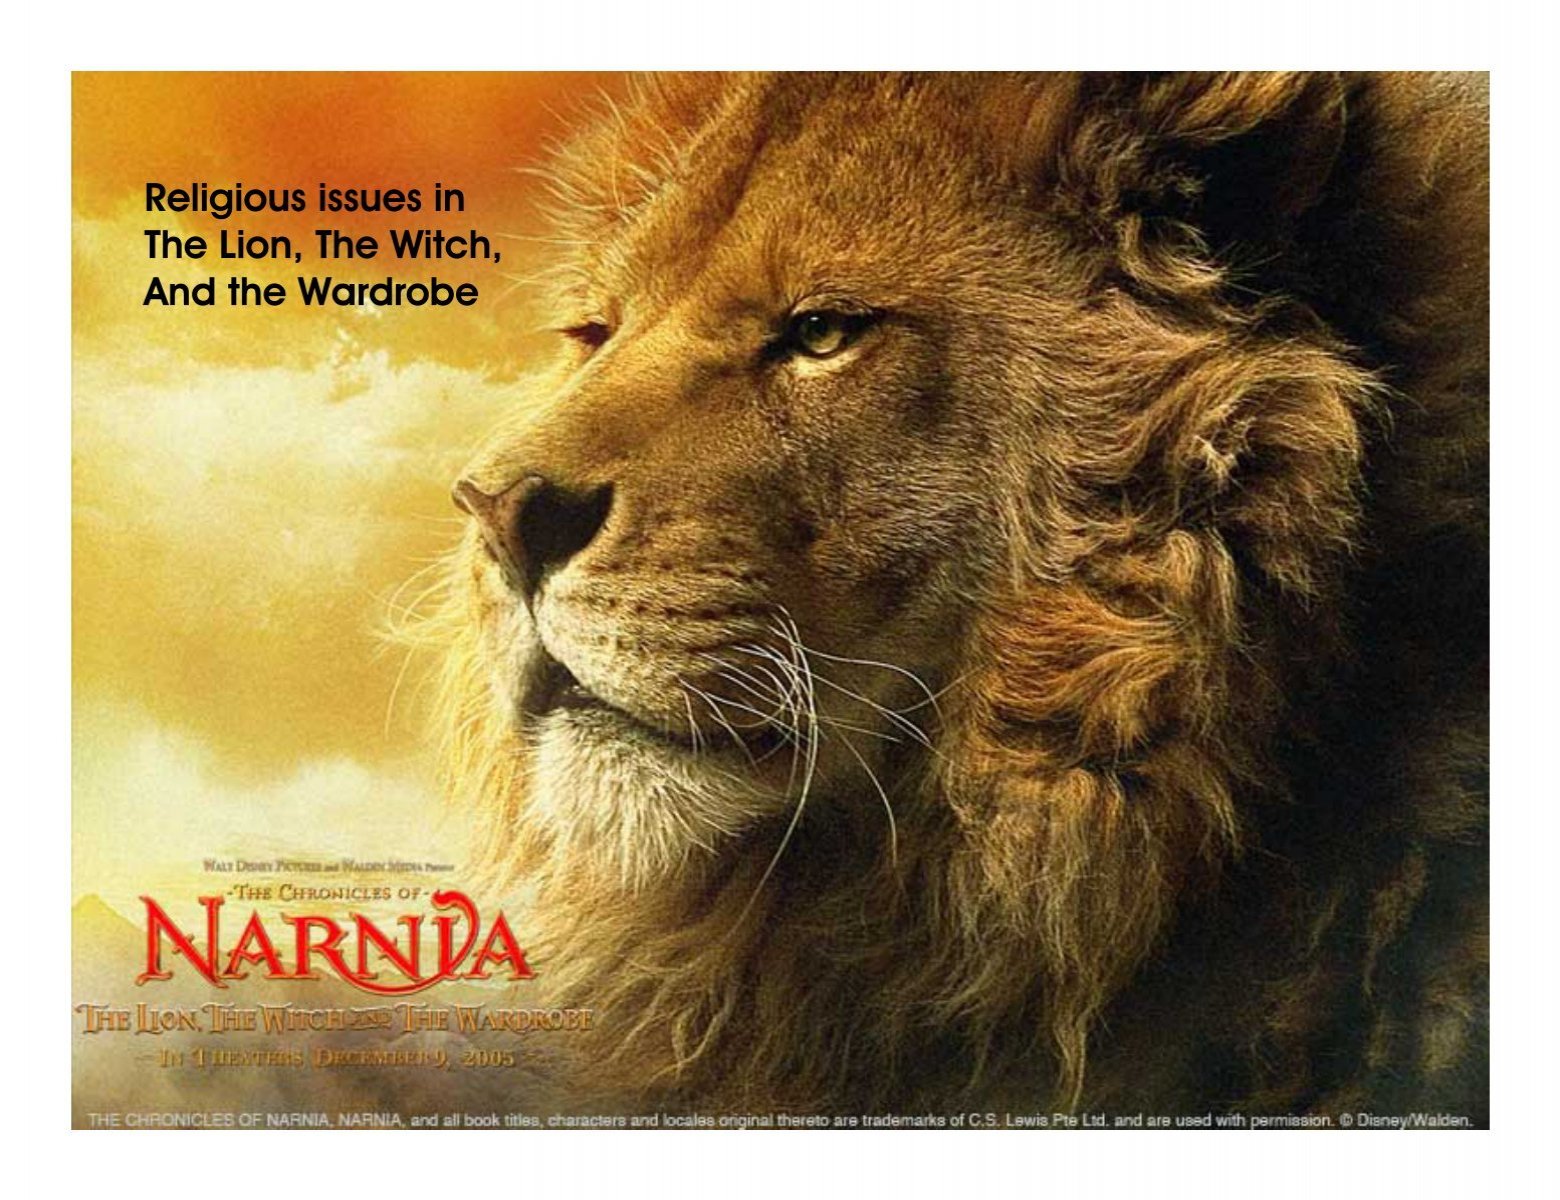 Favorite Narnia moments (2): Shasta meets Aslan